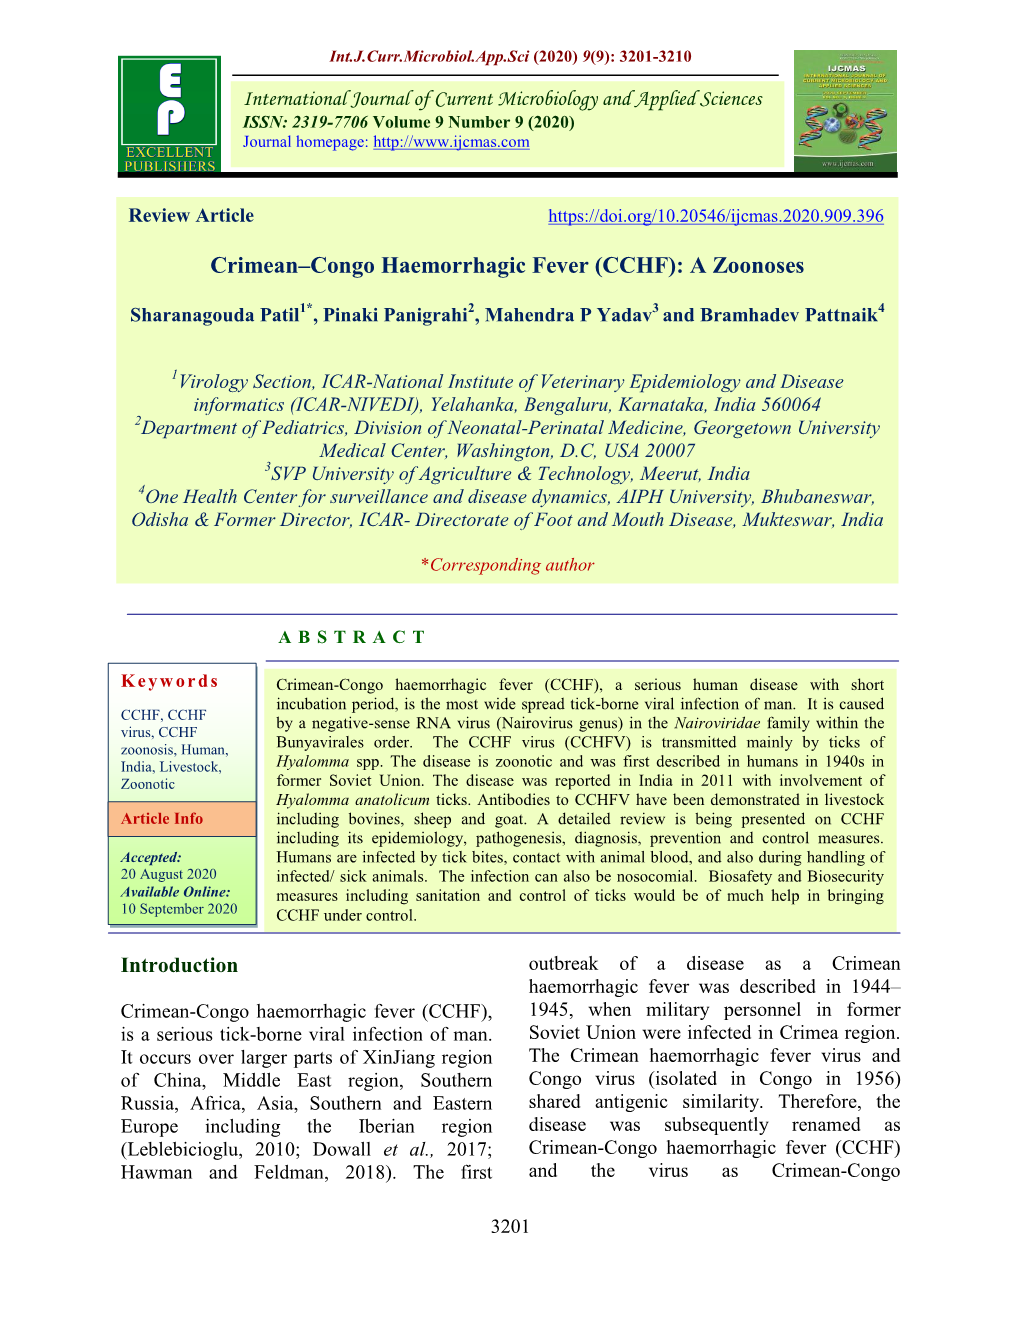 Crimean–Congo Haemorrhagic Fever (CCHF): a Zoonoses